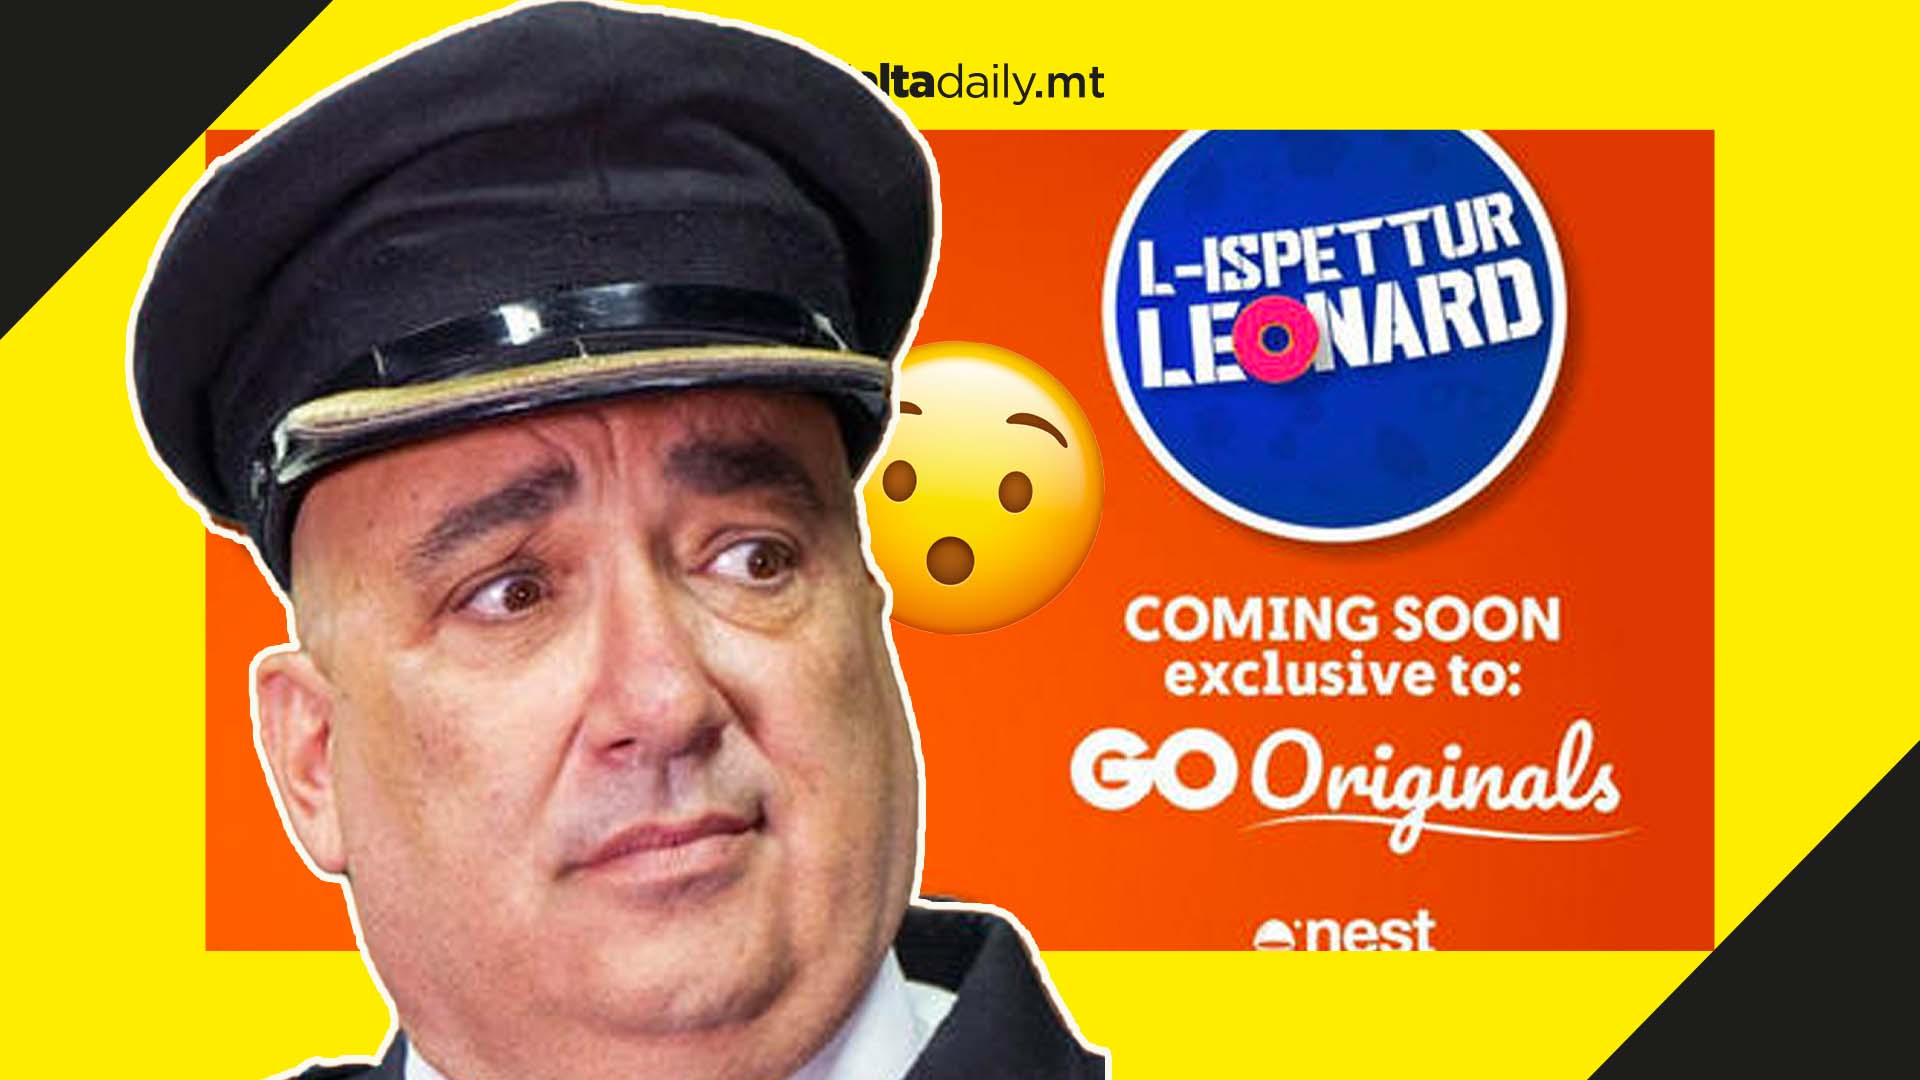 Simpatici spin-off ‘L-ispettur Leonard’ coming to GO’s ‘Tokis’